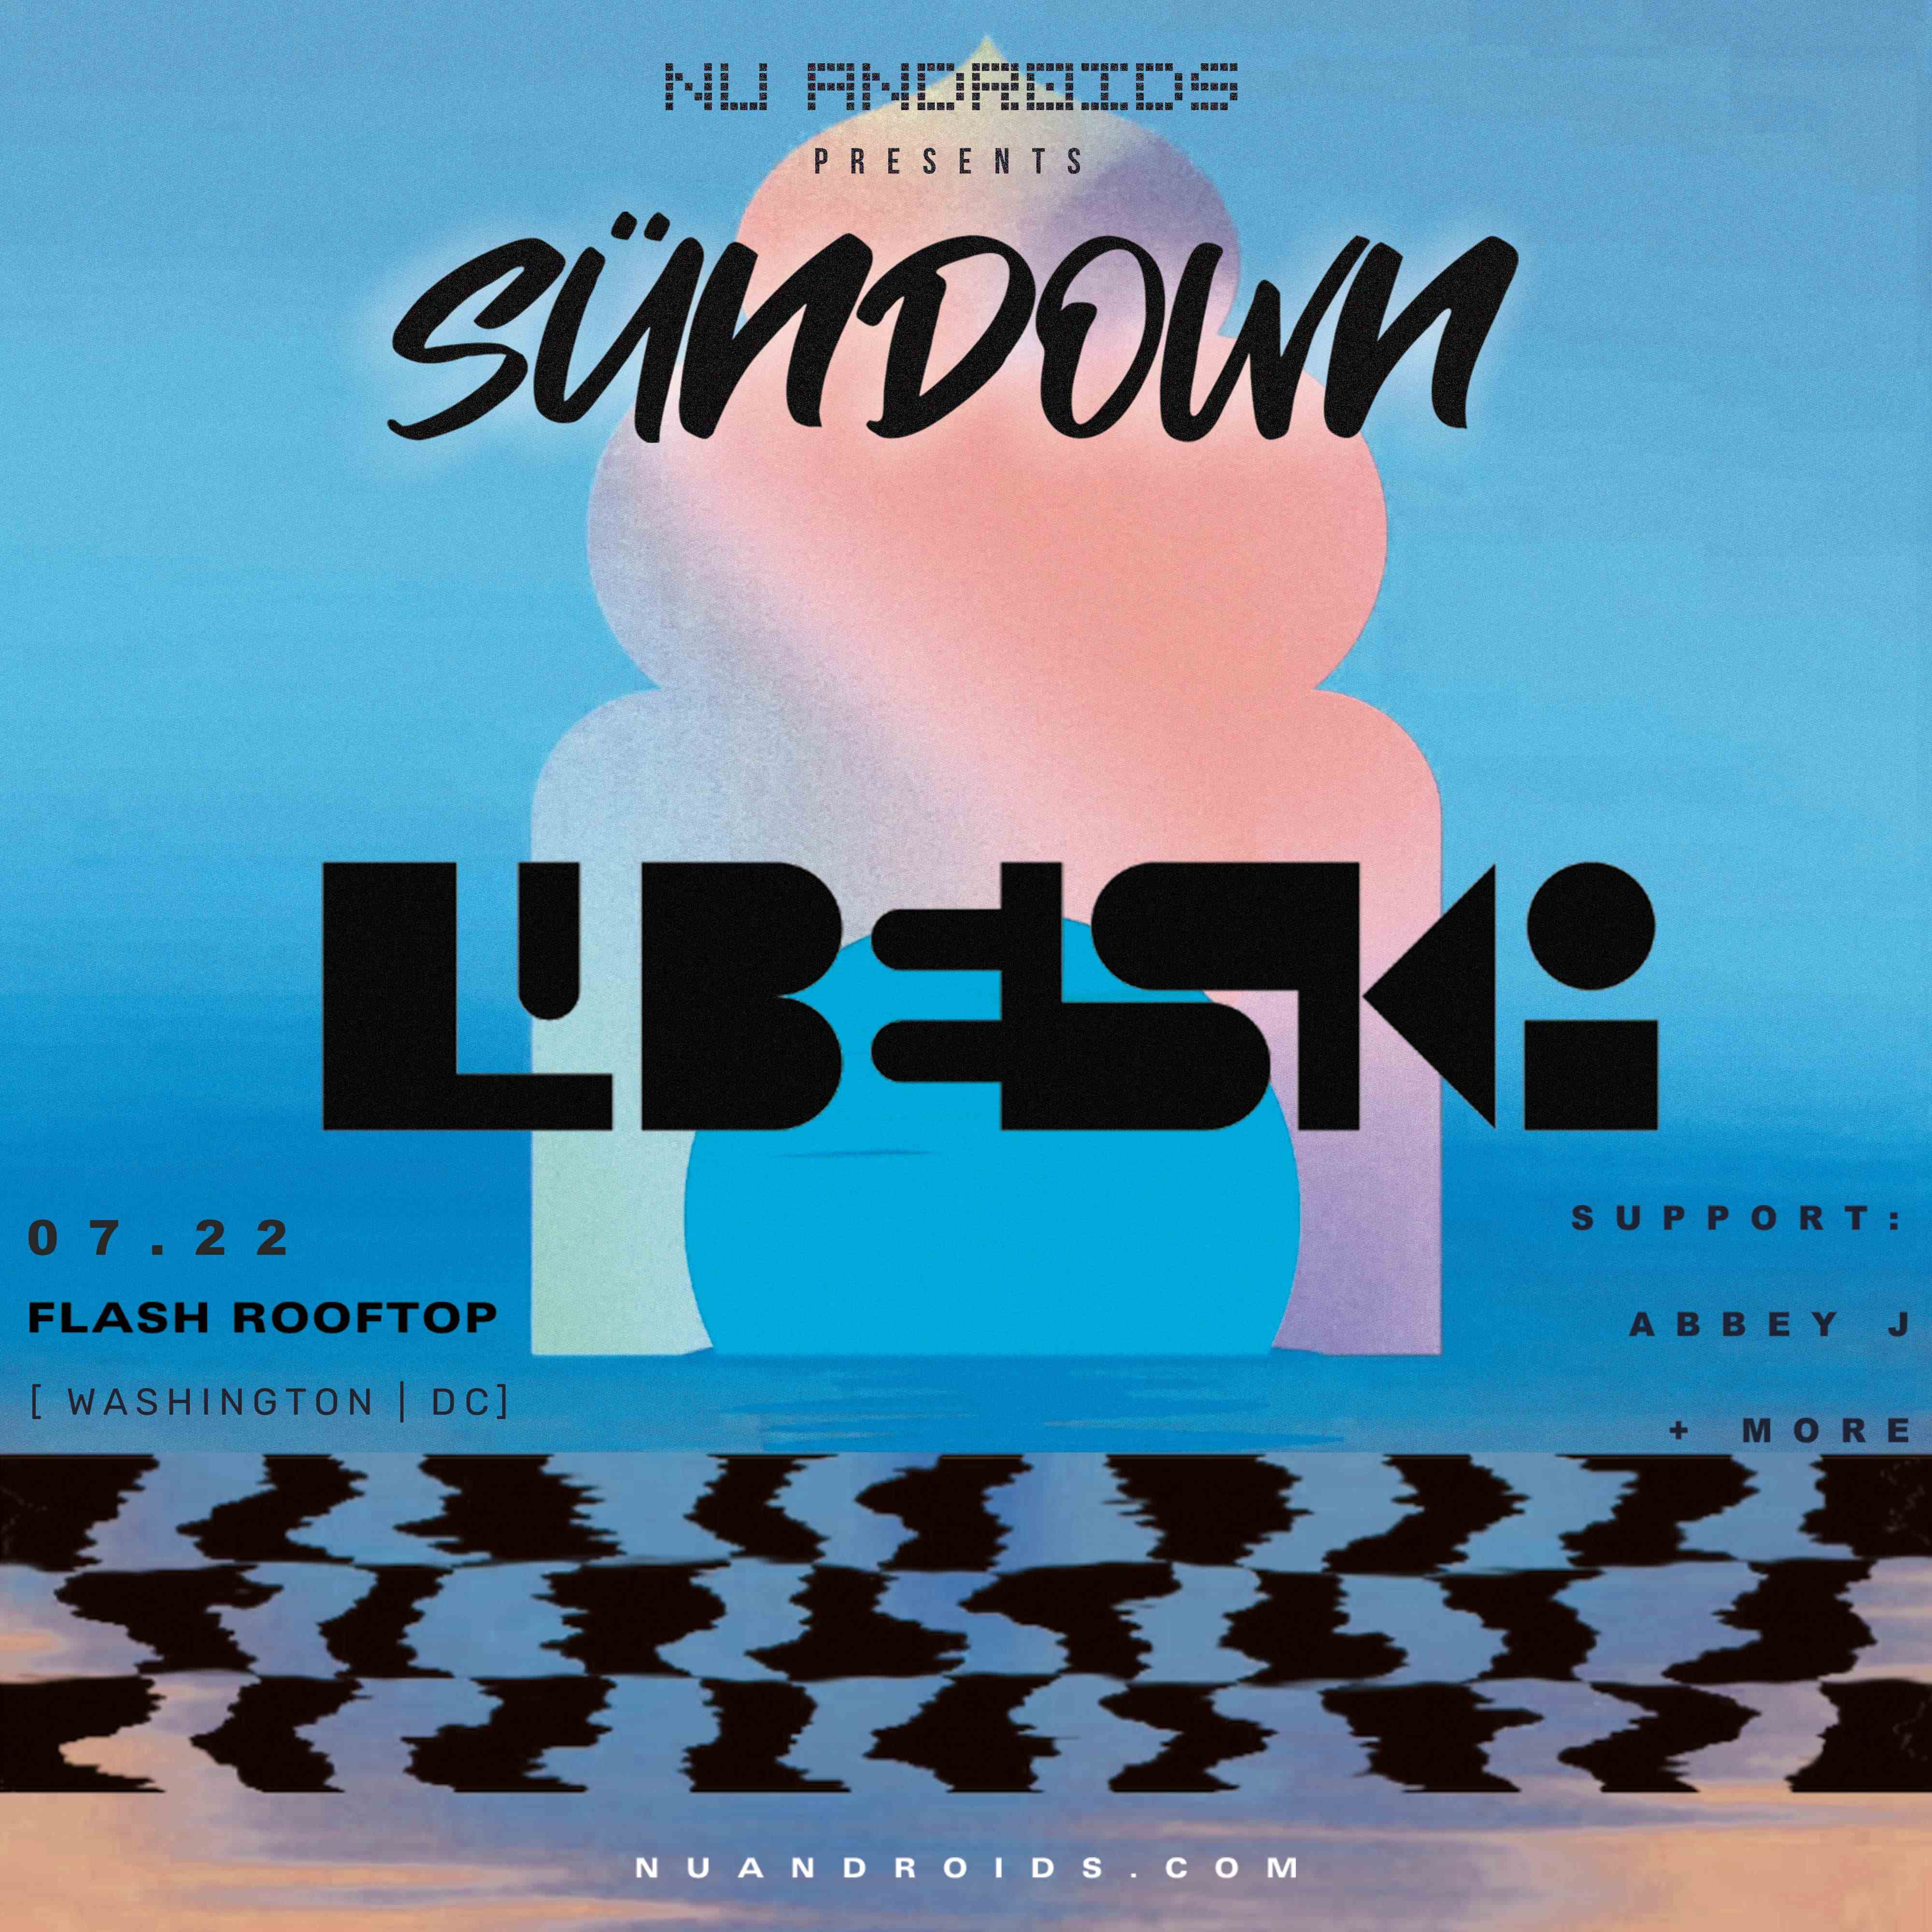 Nü Androids presents SünDown: Lubelski (21+) event flyer